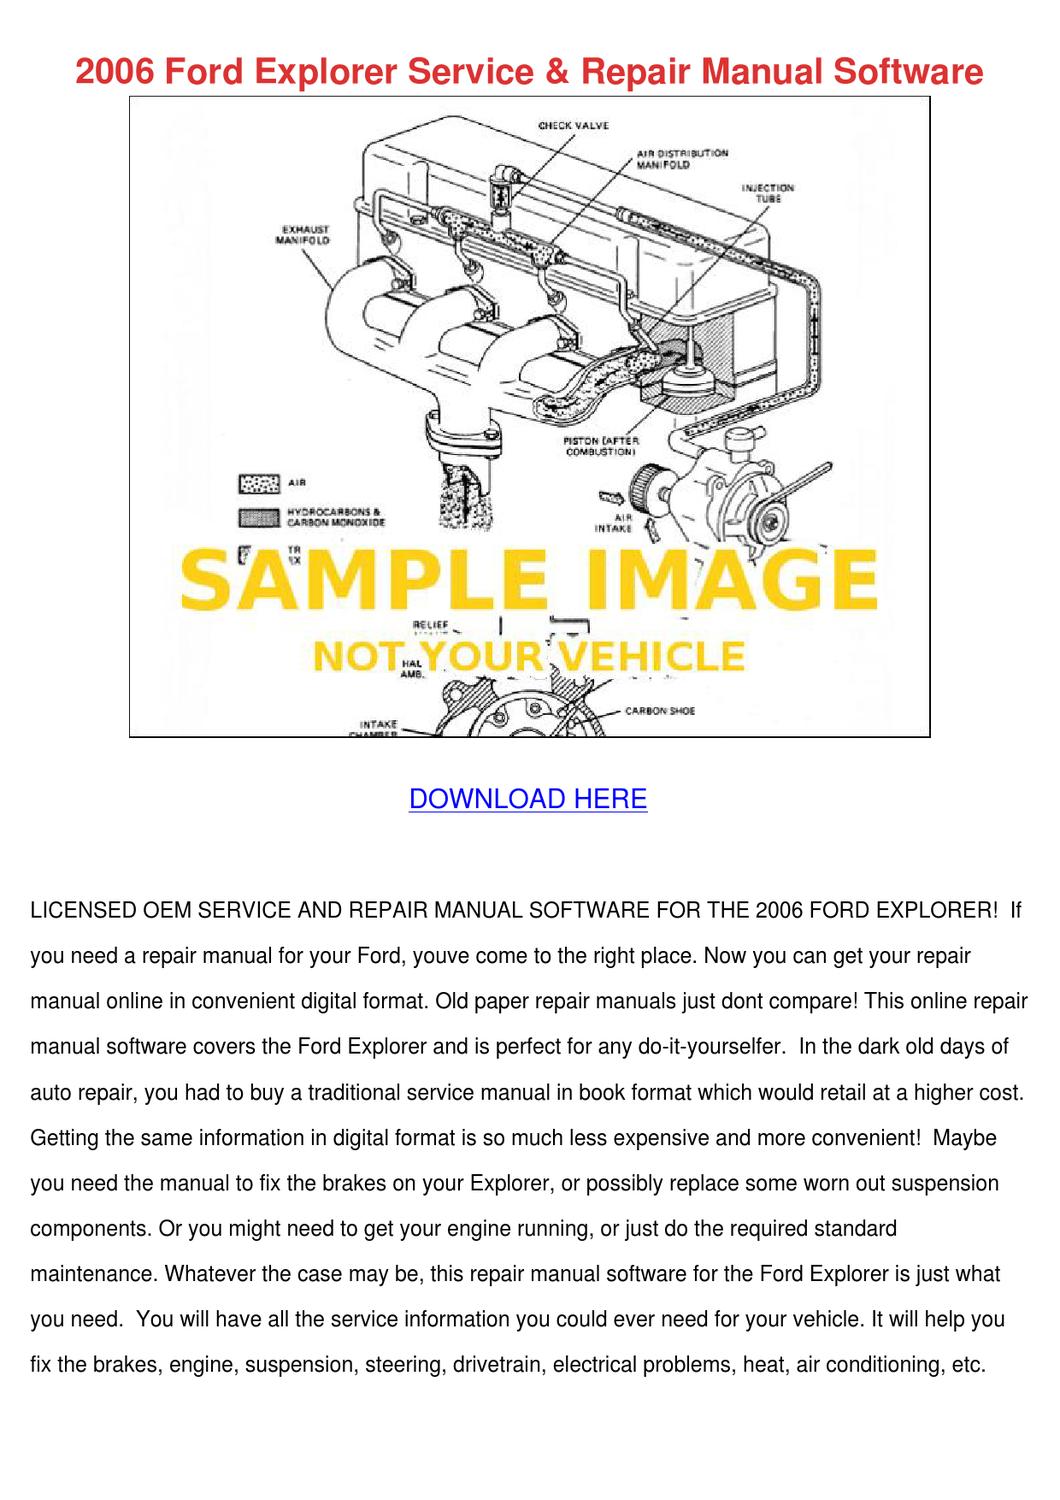 2006 Ford Explorer Manual Download